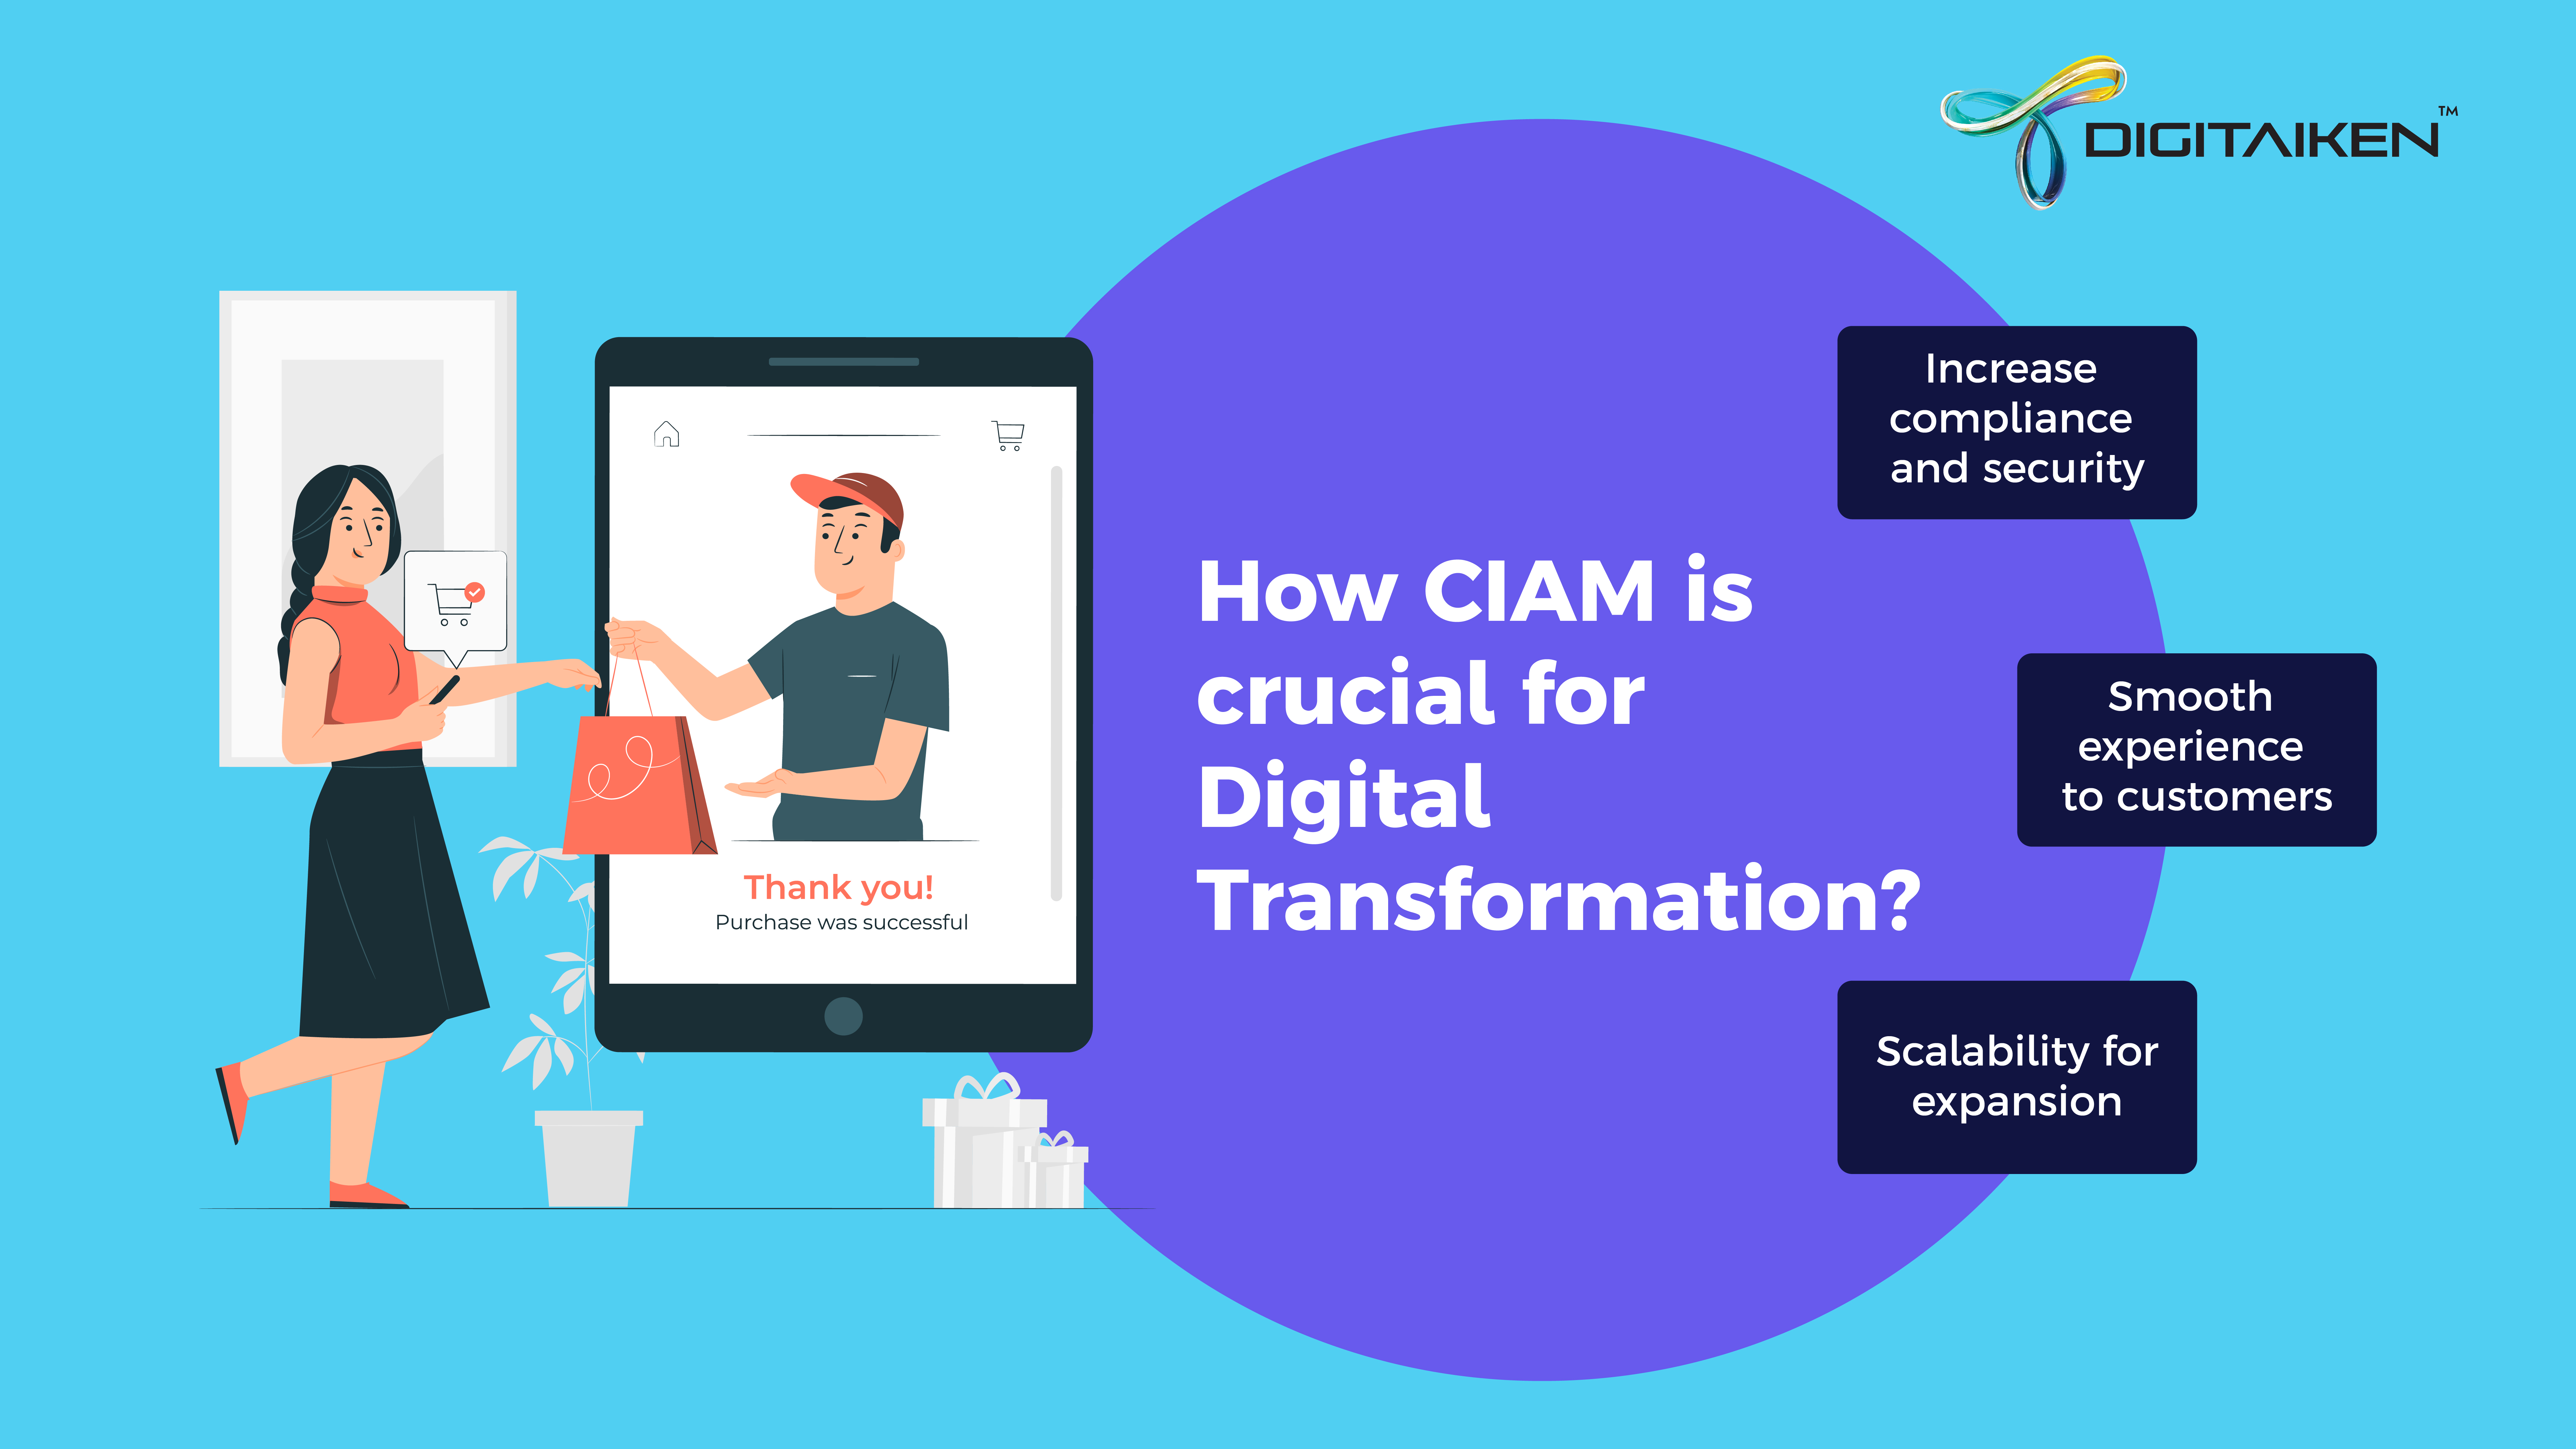 CIAM is crucial for Digital Transformation